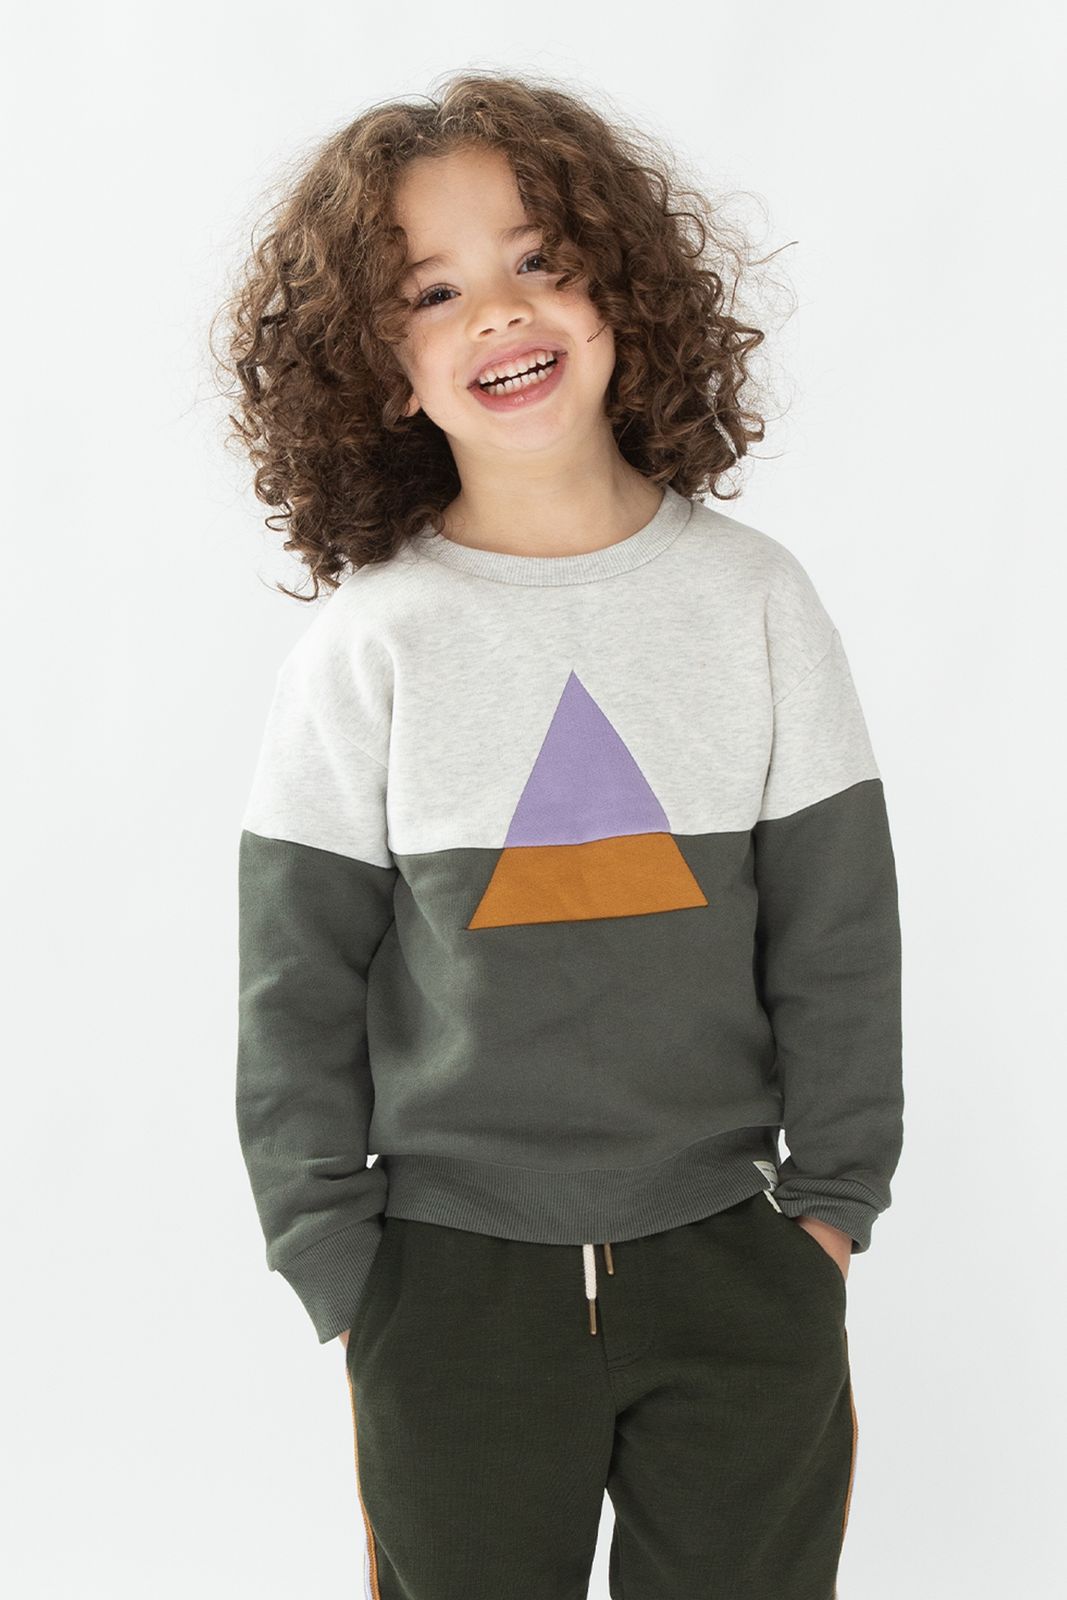 Eigenlijk wortel Lima Groene colorblock sweater met driehoek - Kids | Sissy-Boy